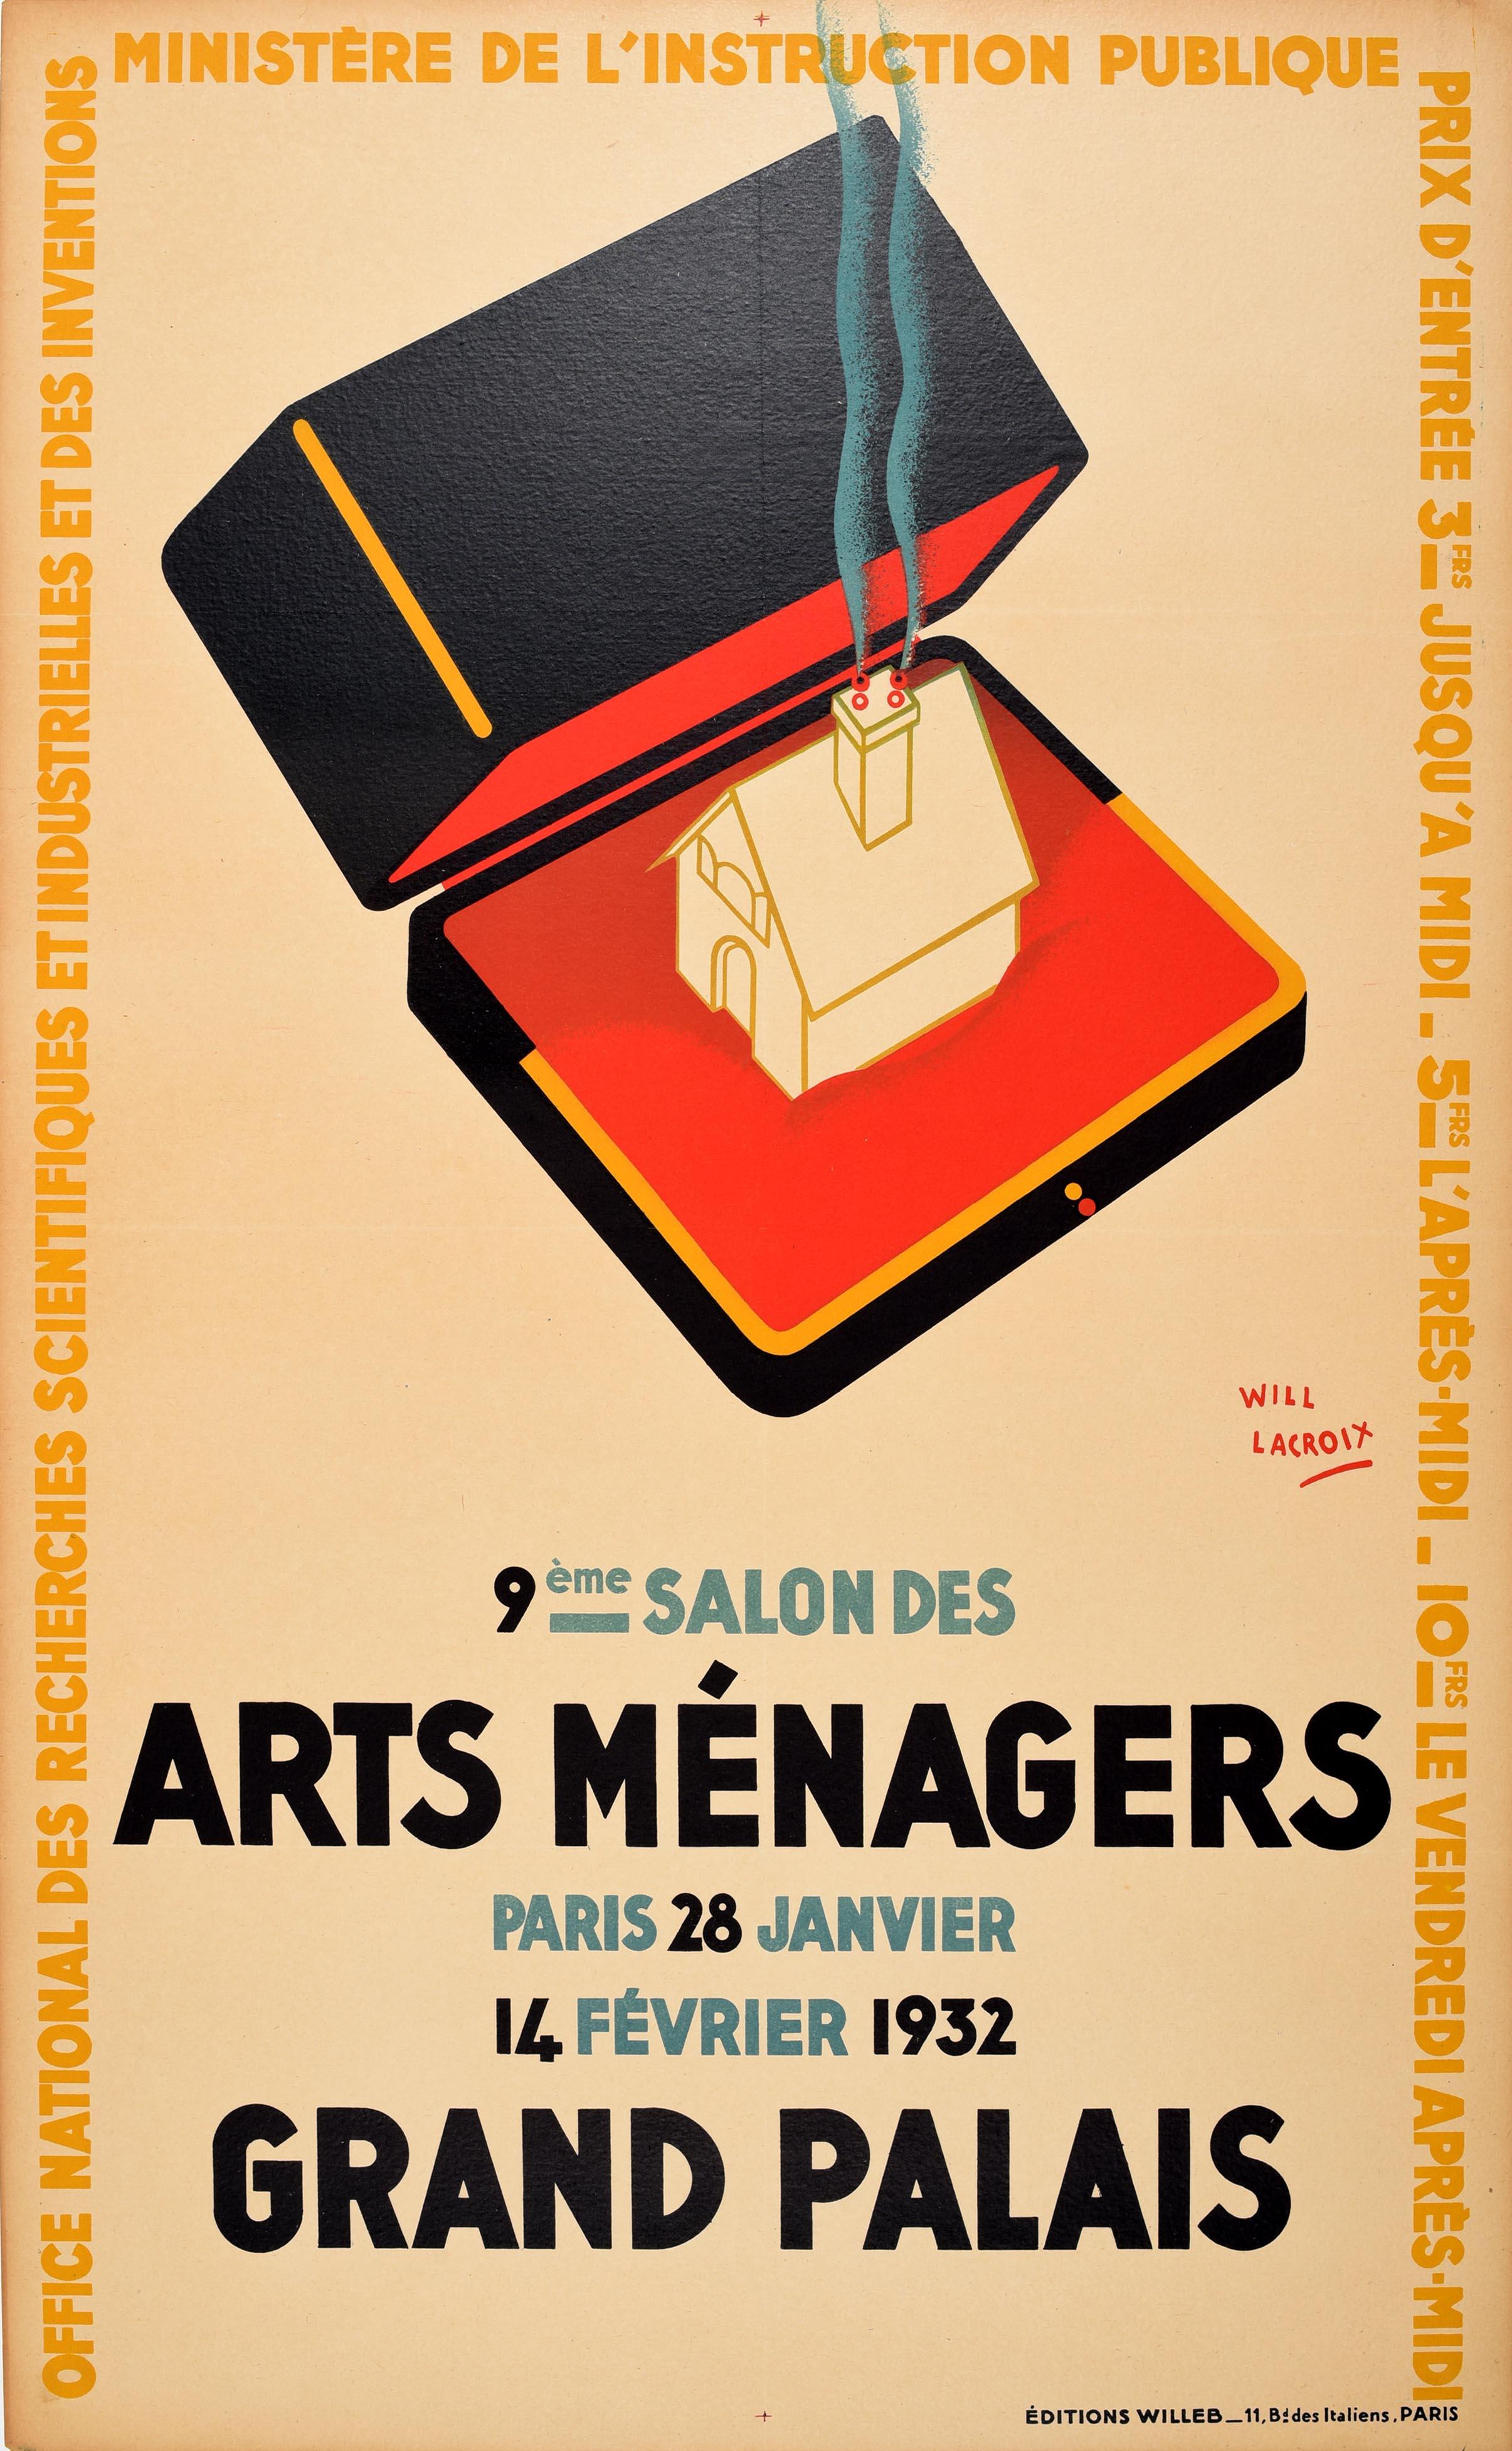 Will Lacroix Print - Original Vintage Poster For The Arts Menagers Household Show Grand Palais Paris